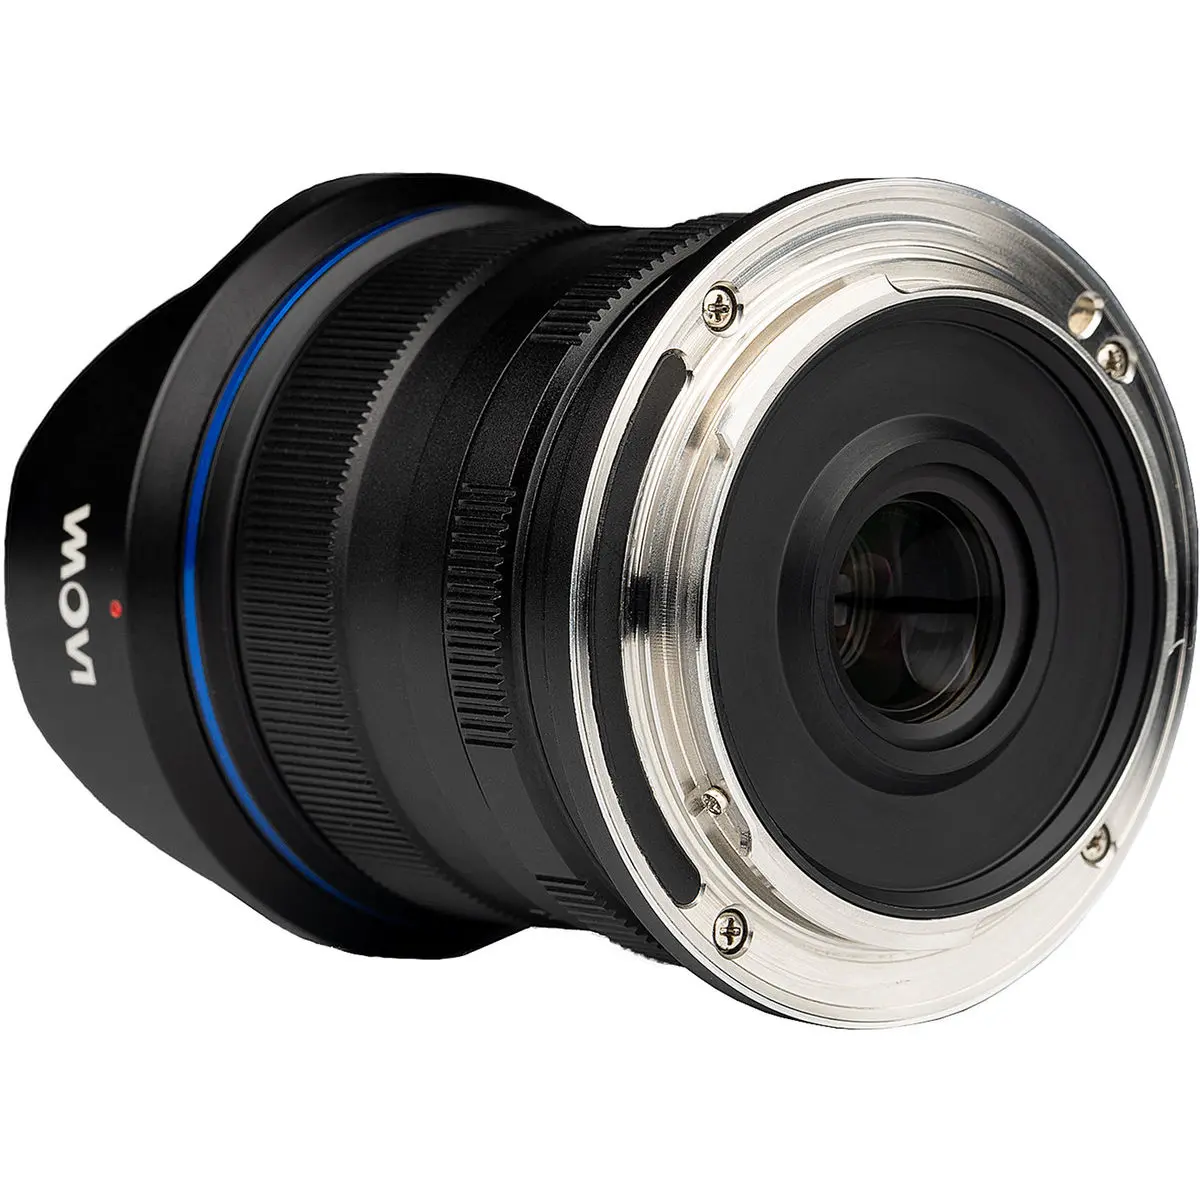 2. LAOWA Lens 9mm F/2.8 Zero-D (DJI DL)